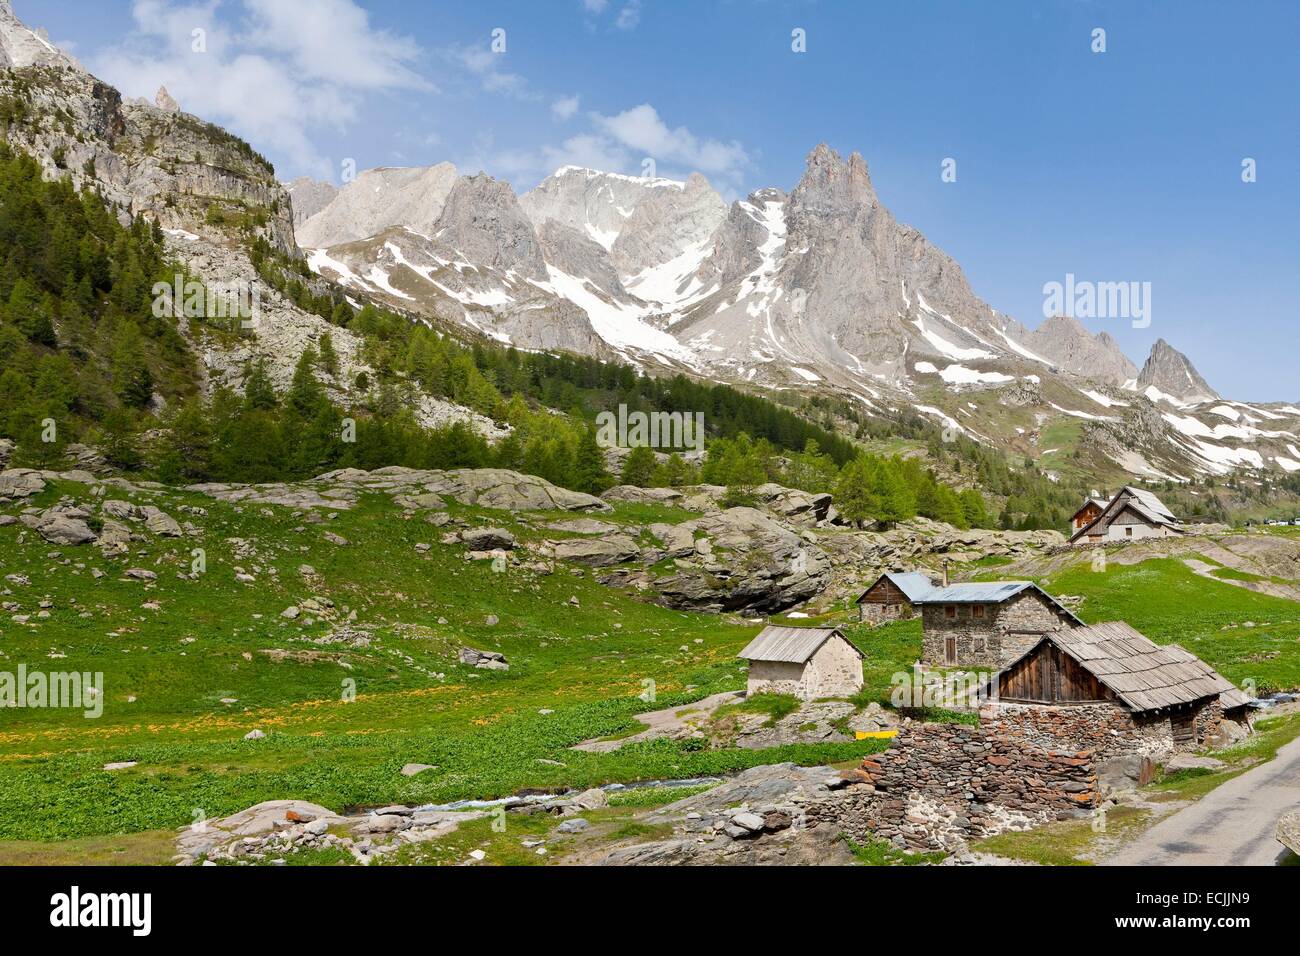 France, Hautes-Alpes, Nevache La Claree valley, overlooking the Pointe Cerces (3097m) Stock Photo